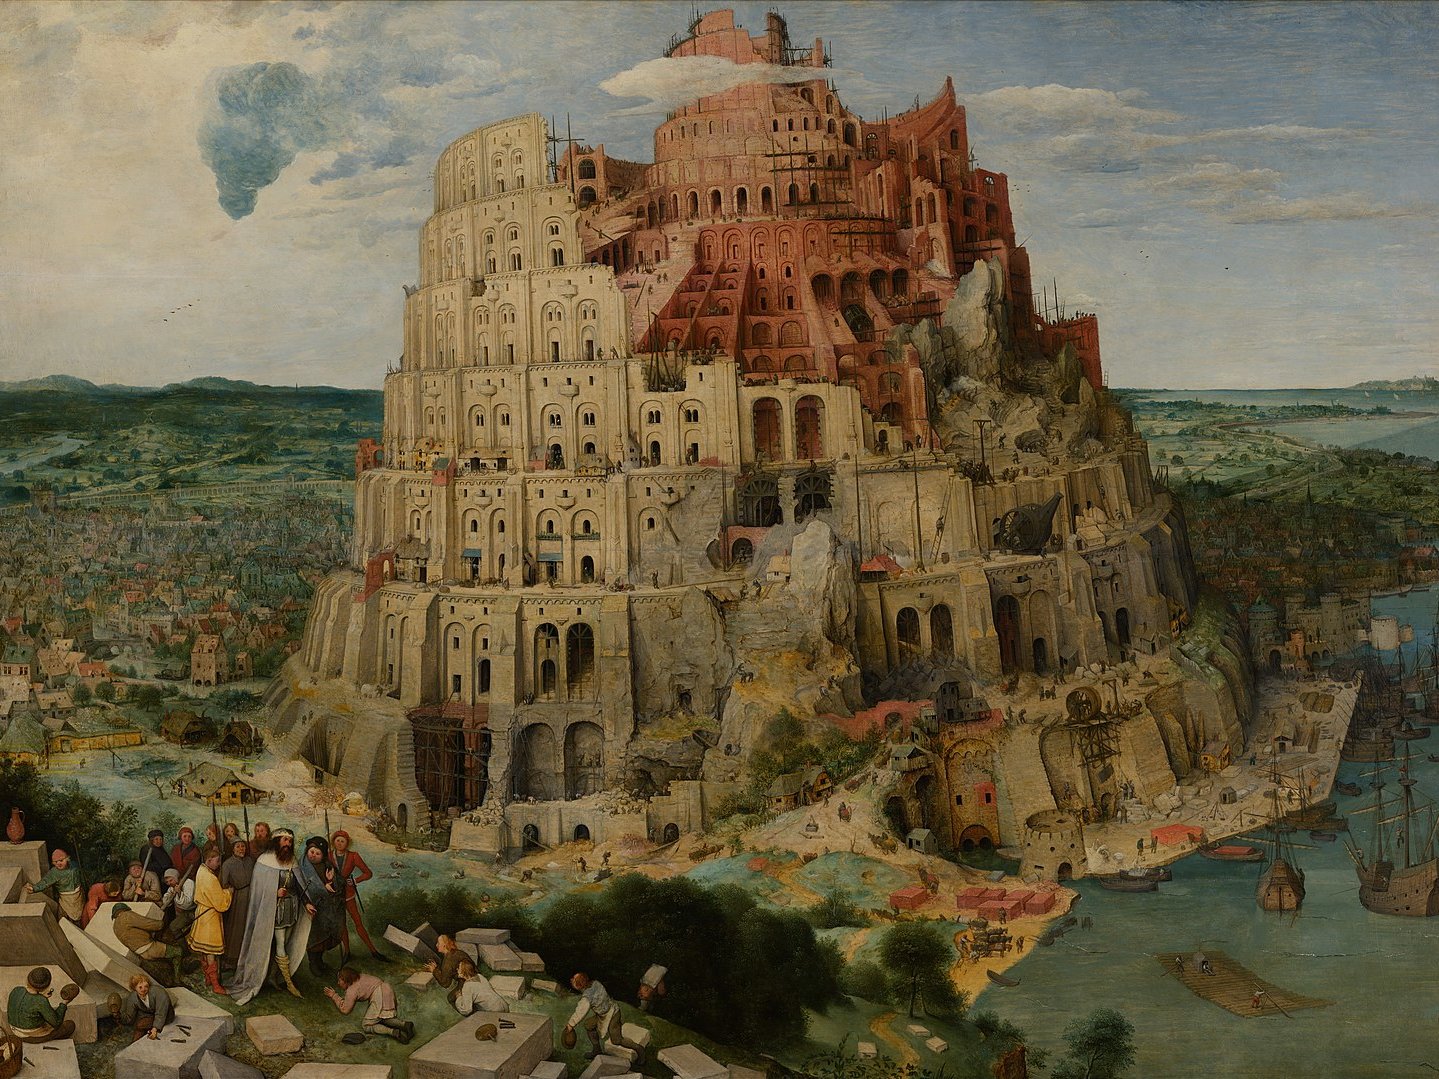 Pieter Bruegel the Elder (c. 1525/1530–1569): The Tower of Babel, c. 1563, oil on panel, Kunsthistorisches Museum, Vienna (image from Google Art Project via Wikimedia)